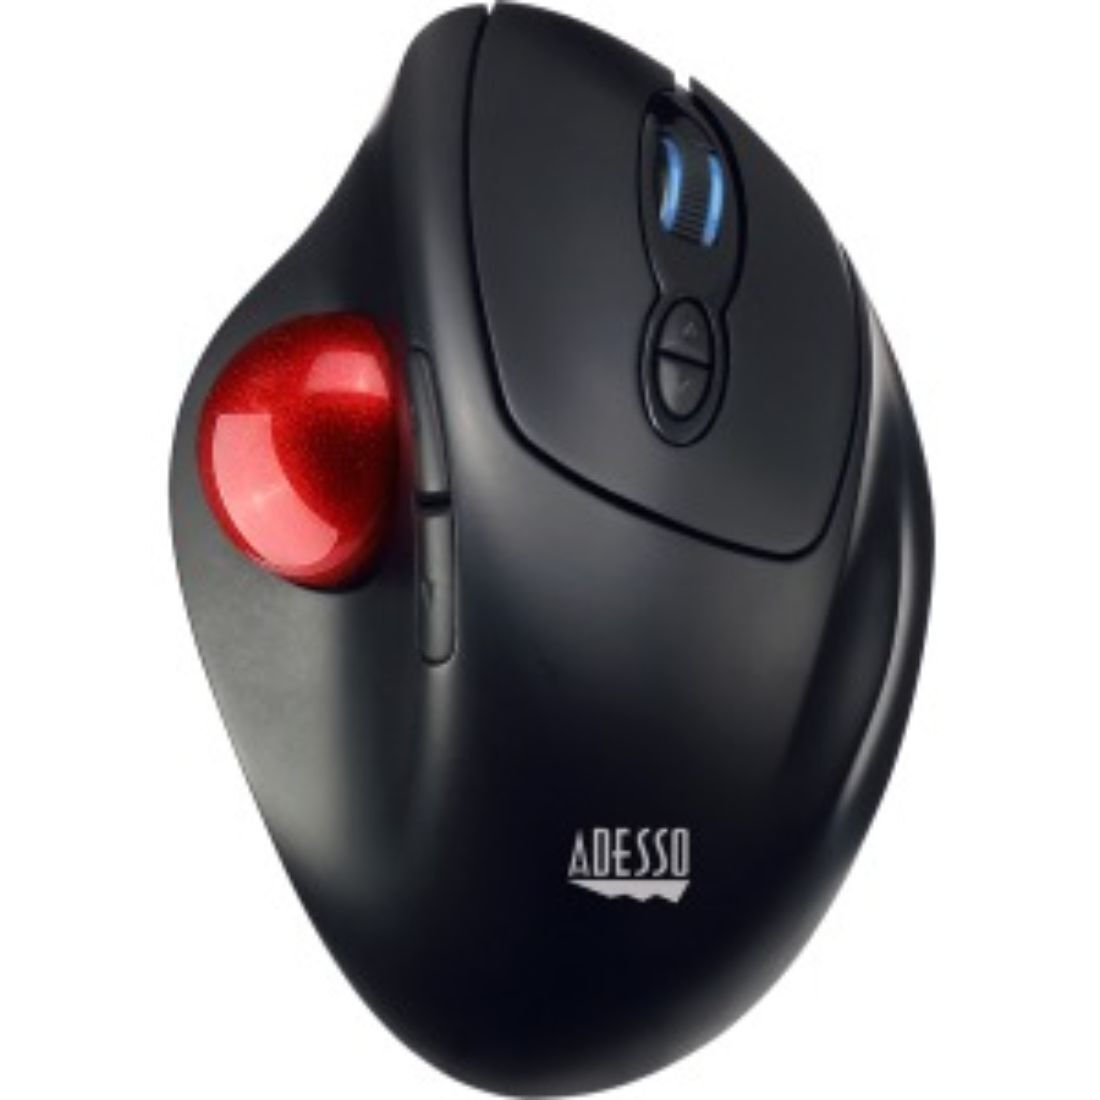 Adesso iMouse T30 Wireless Ergonomic 7-Button Trackball Mouse